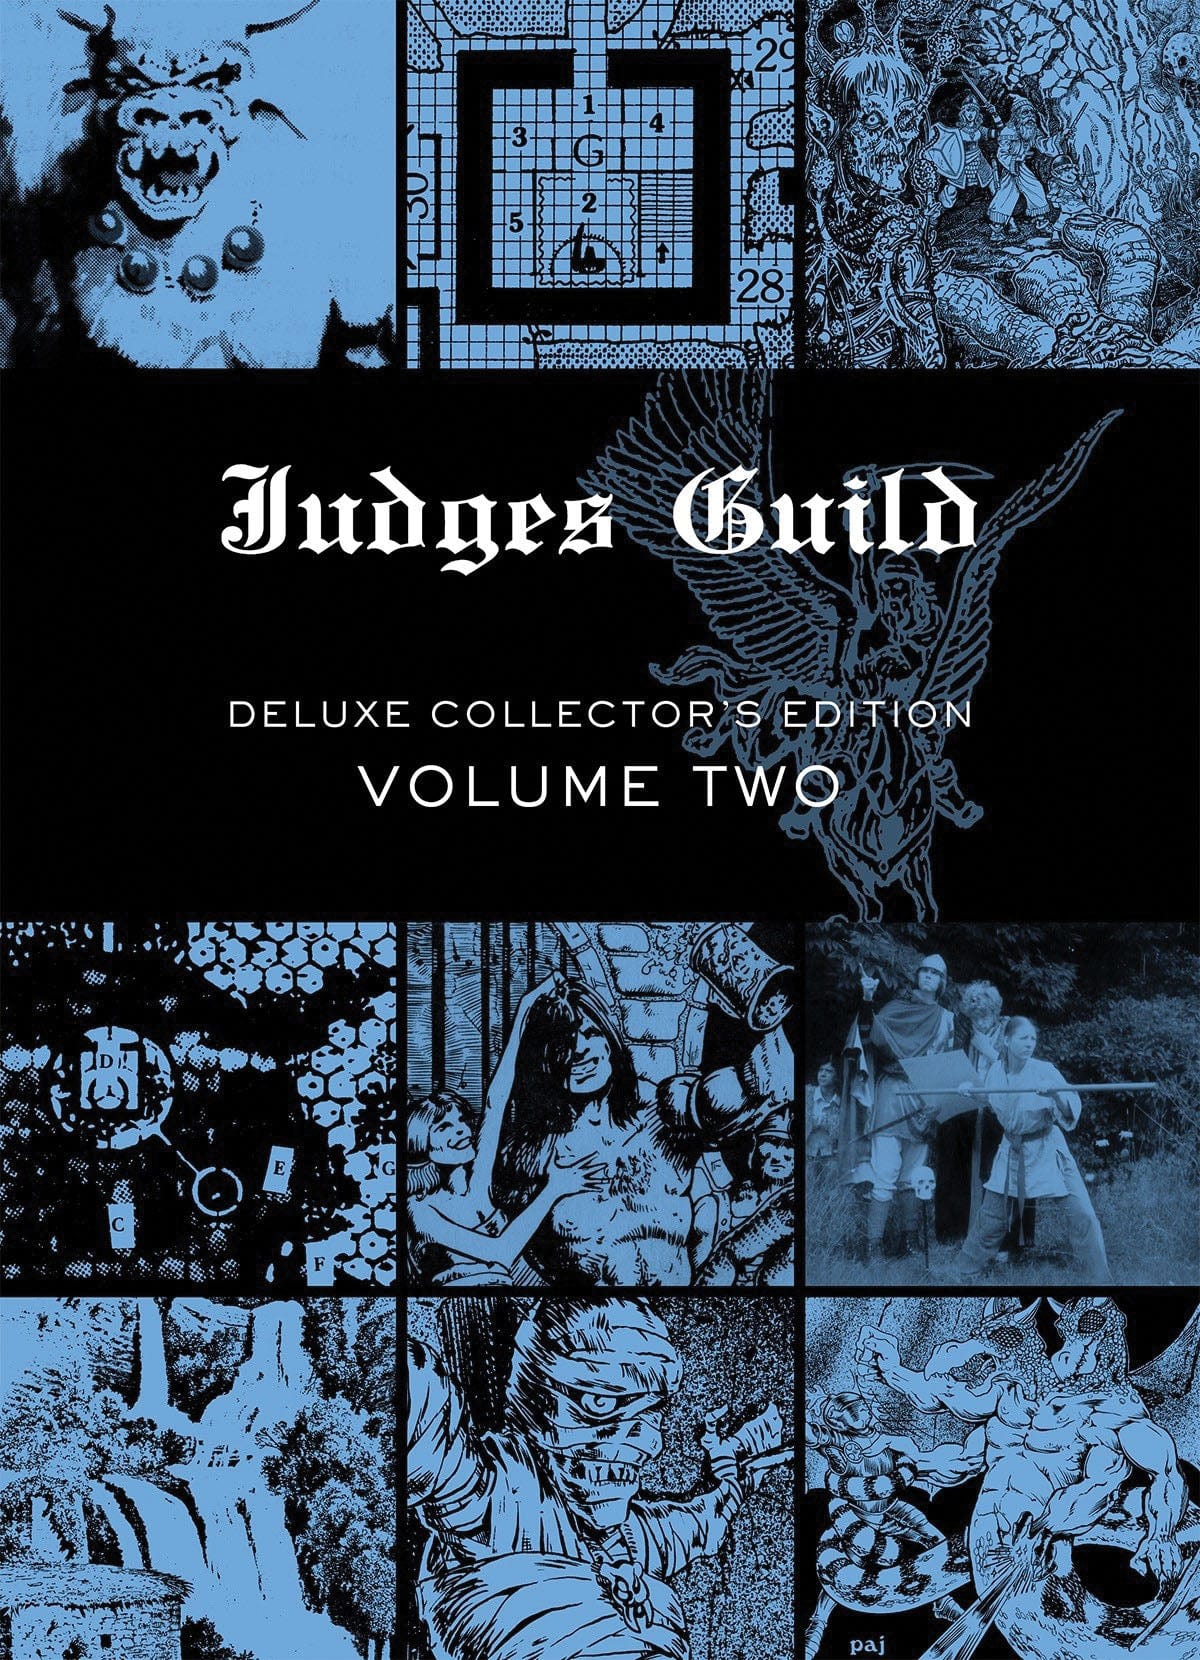 Dark Tower: Judges Guild - Deluxe Collector's Edition Vol. 2 - Third Eye